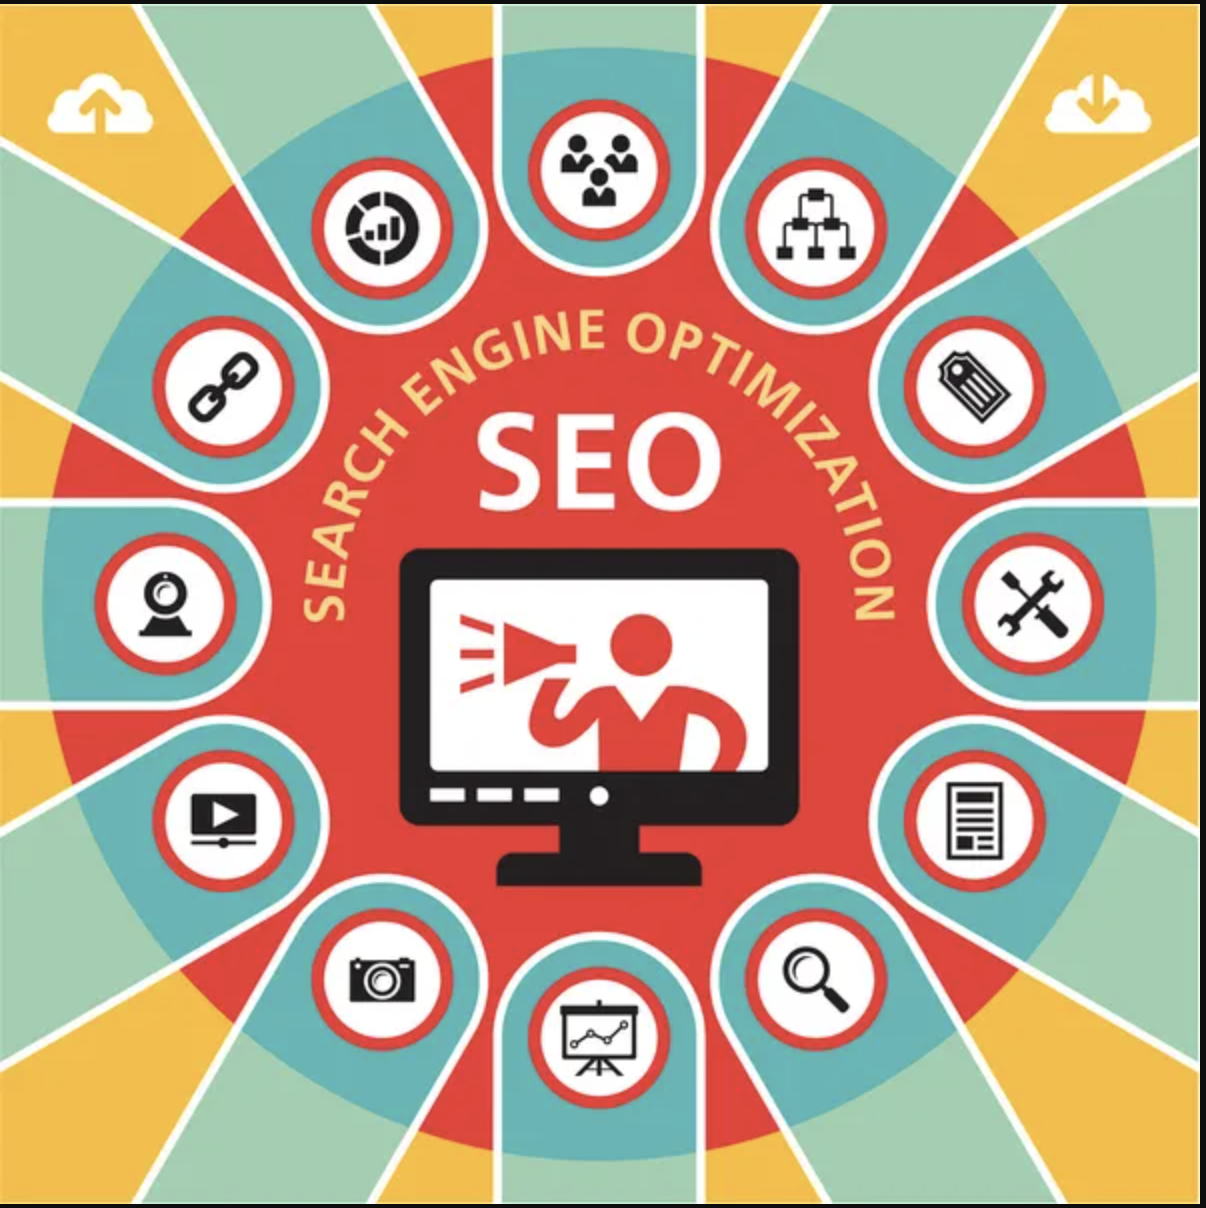 SEO – Search Engine Optimization & Google Search Marketing For 1 Keyword